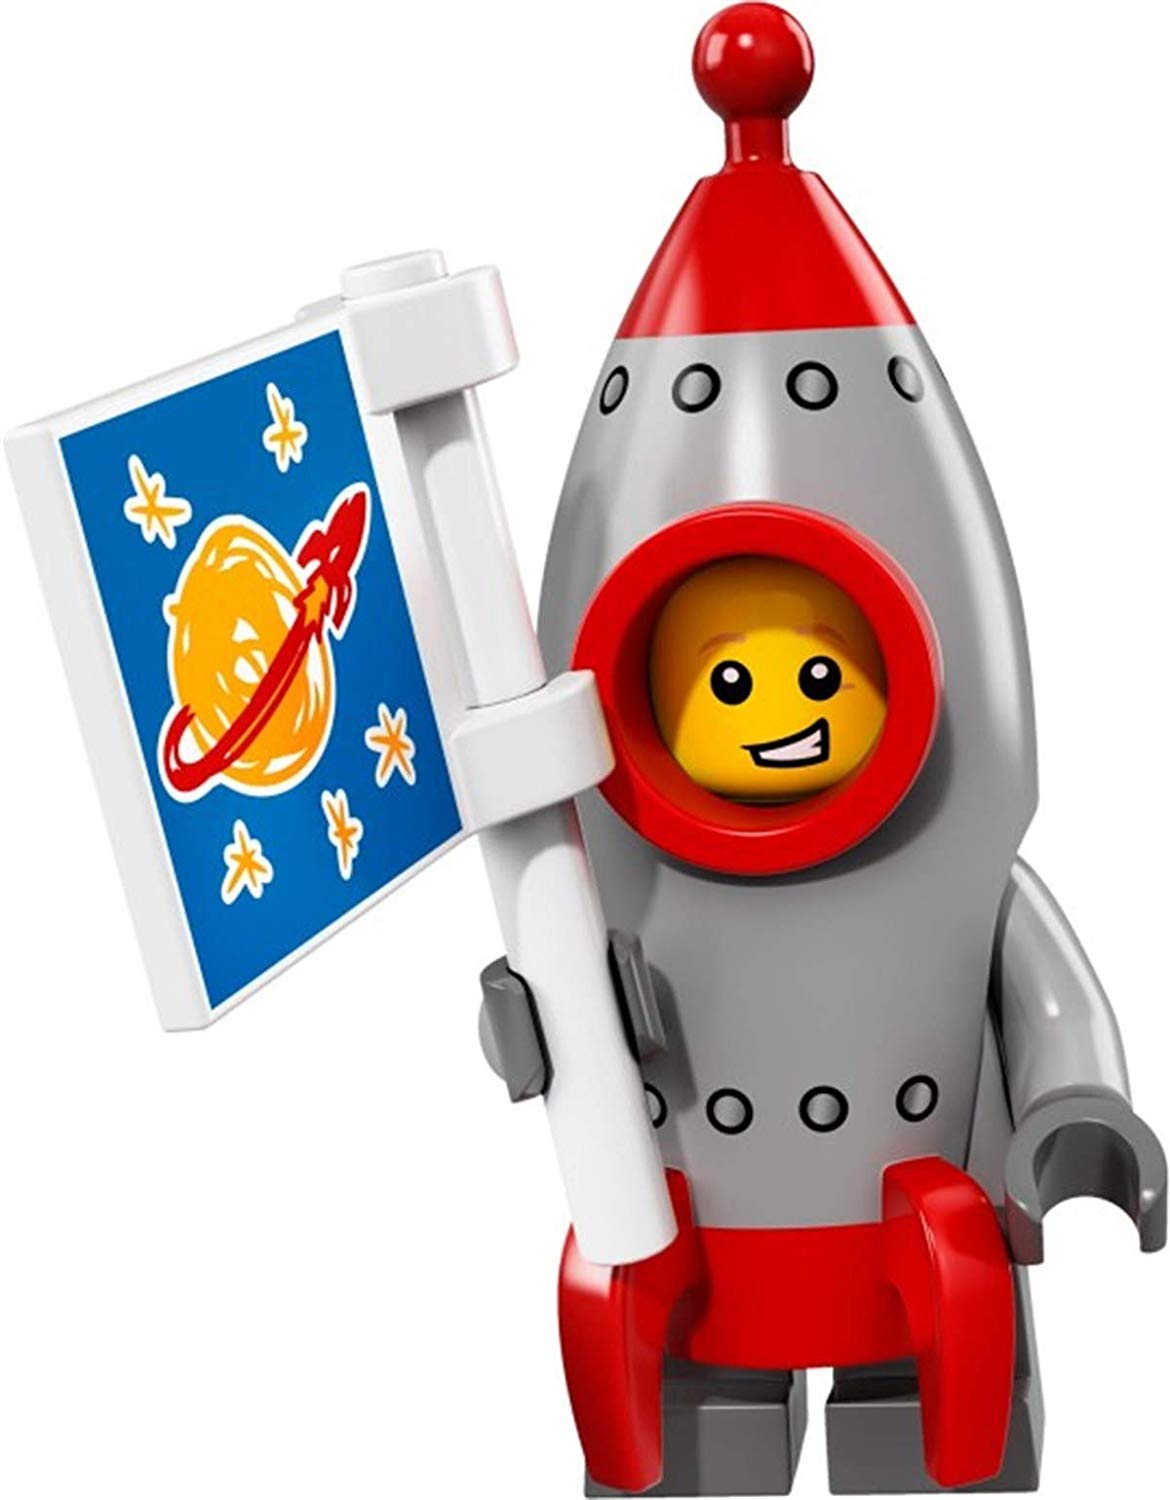 LEGO Minif igures Series 17 # 13 Rocket Boy Minif igure – (Bagged) 71018